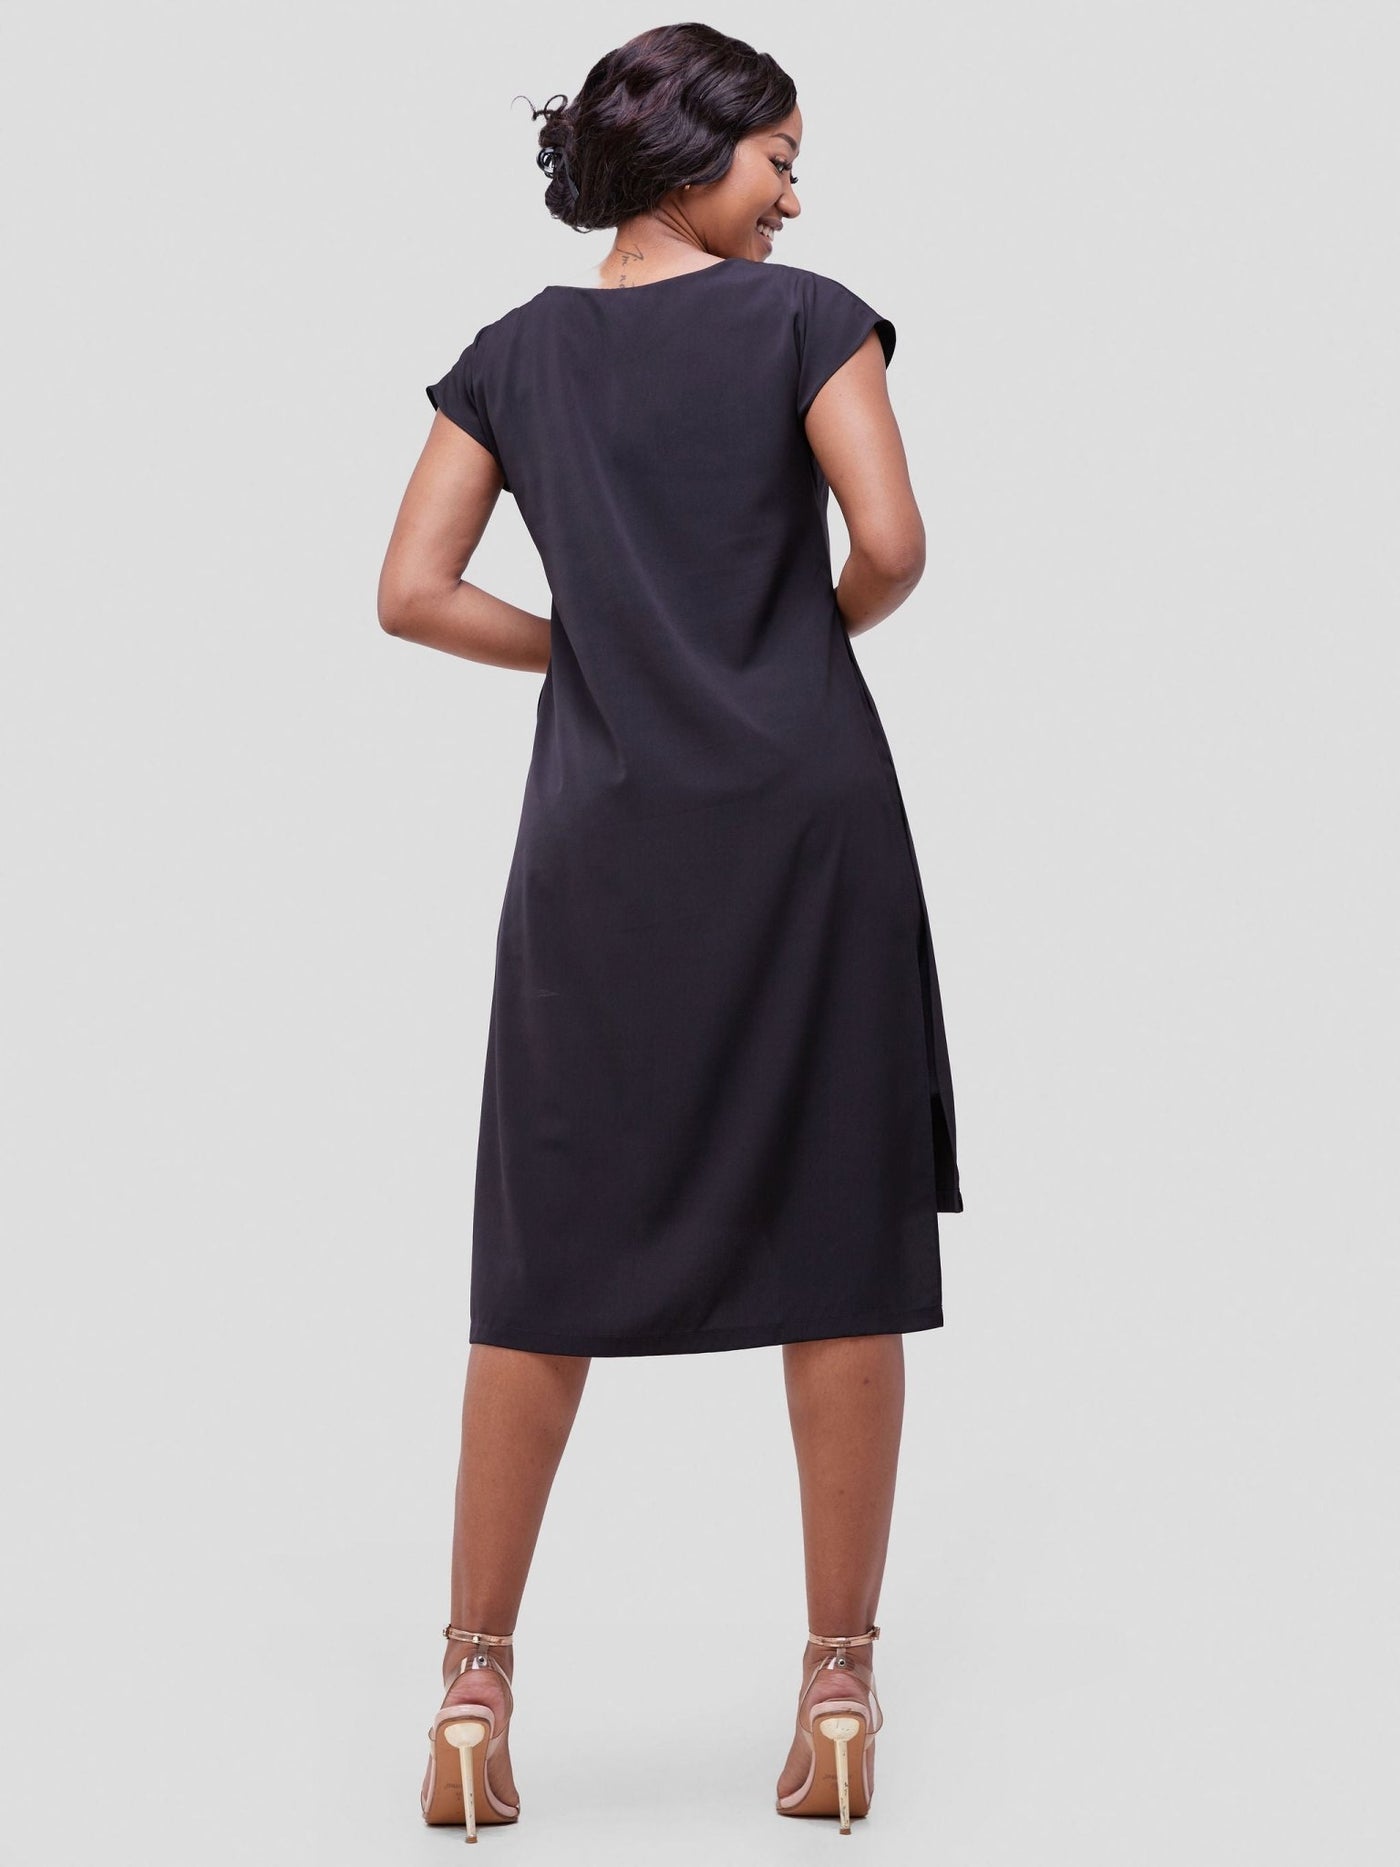 Vivo Soleil Sleeveless Layered Knee Length Dress - Black - Shopzetu